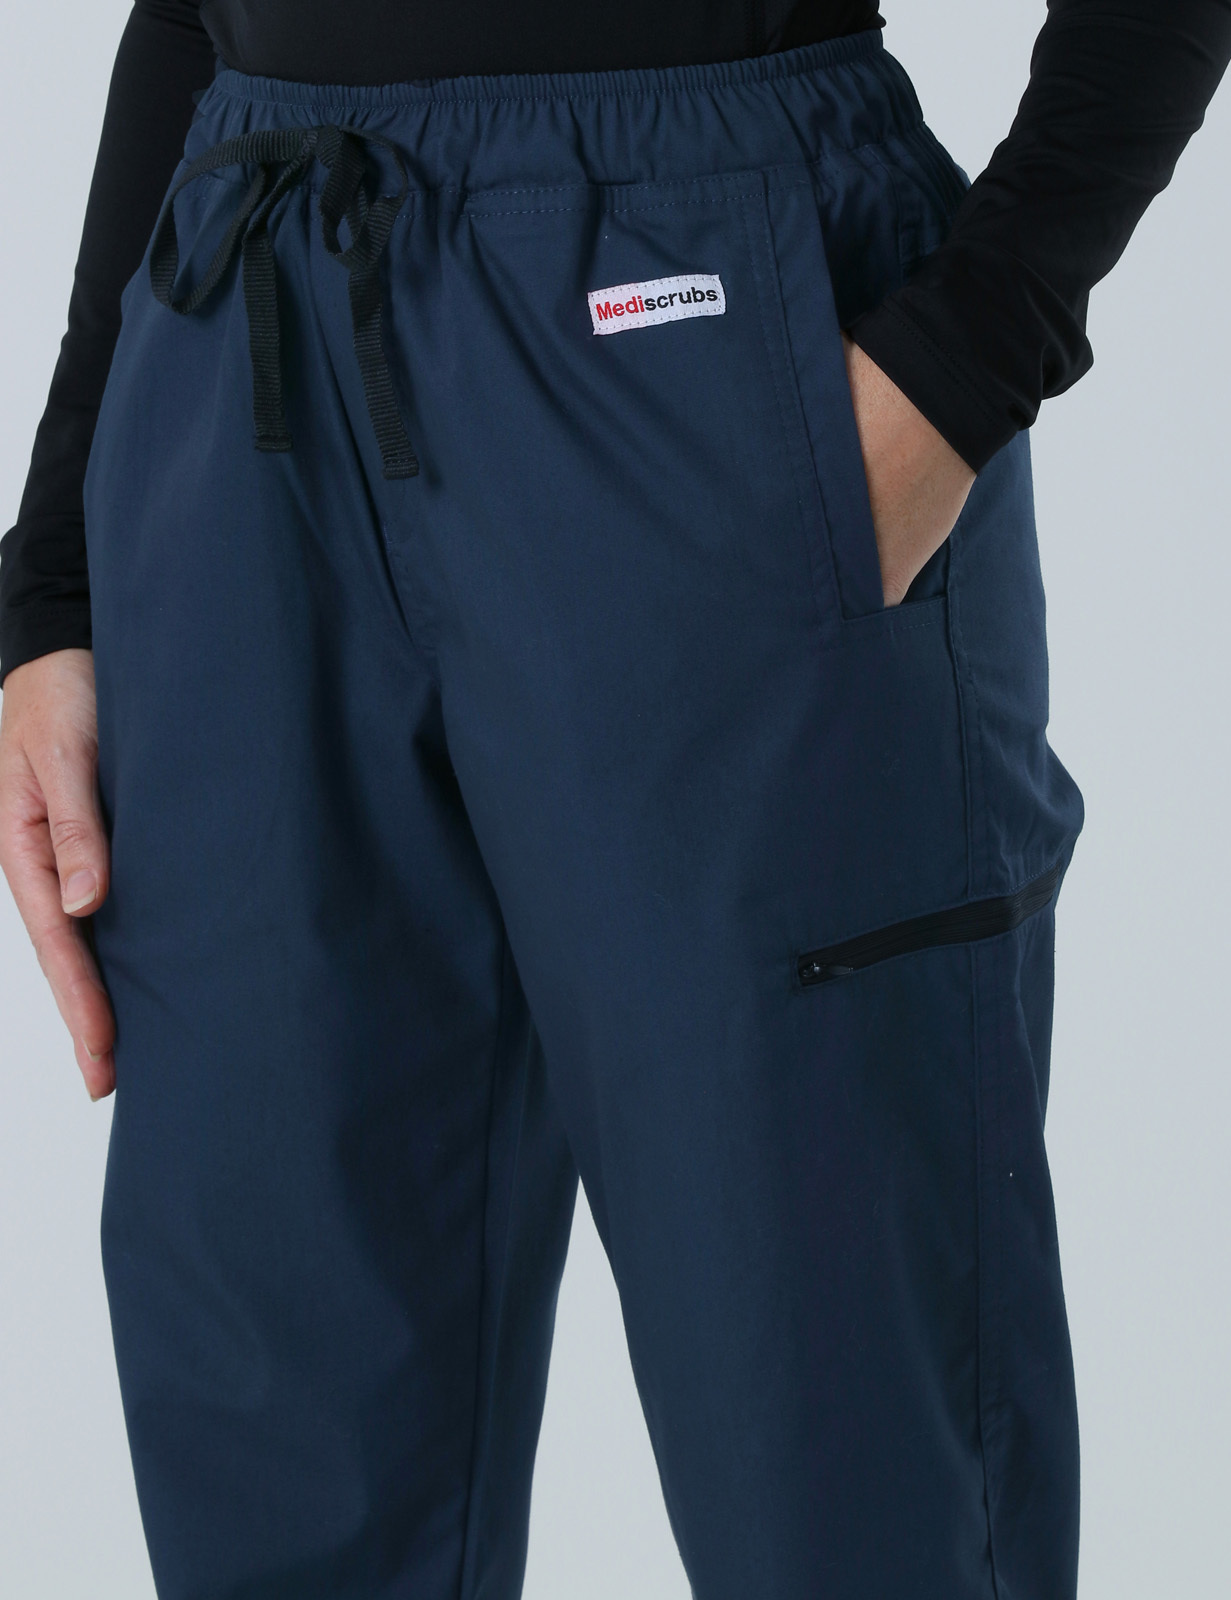 Women's Utility Pants - Navy - X Small - Tall - 1